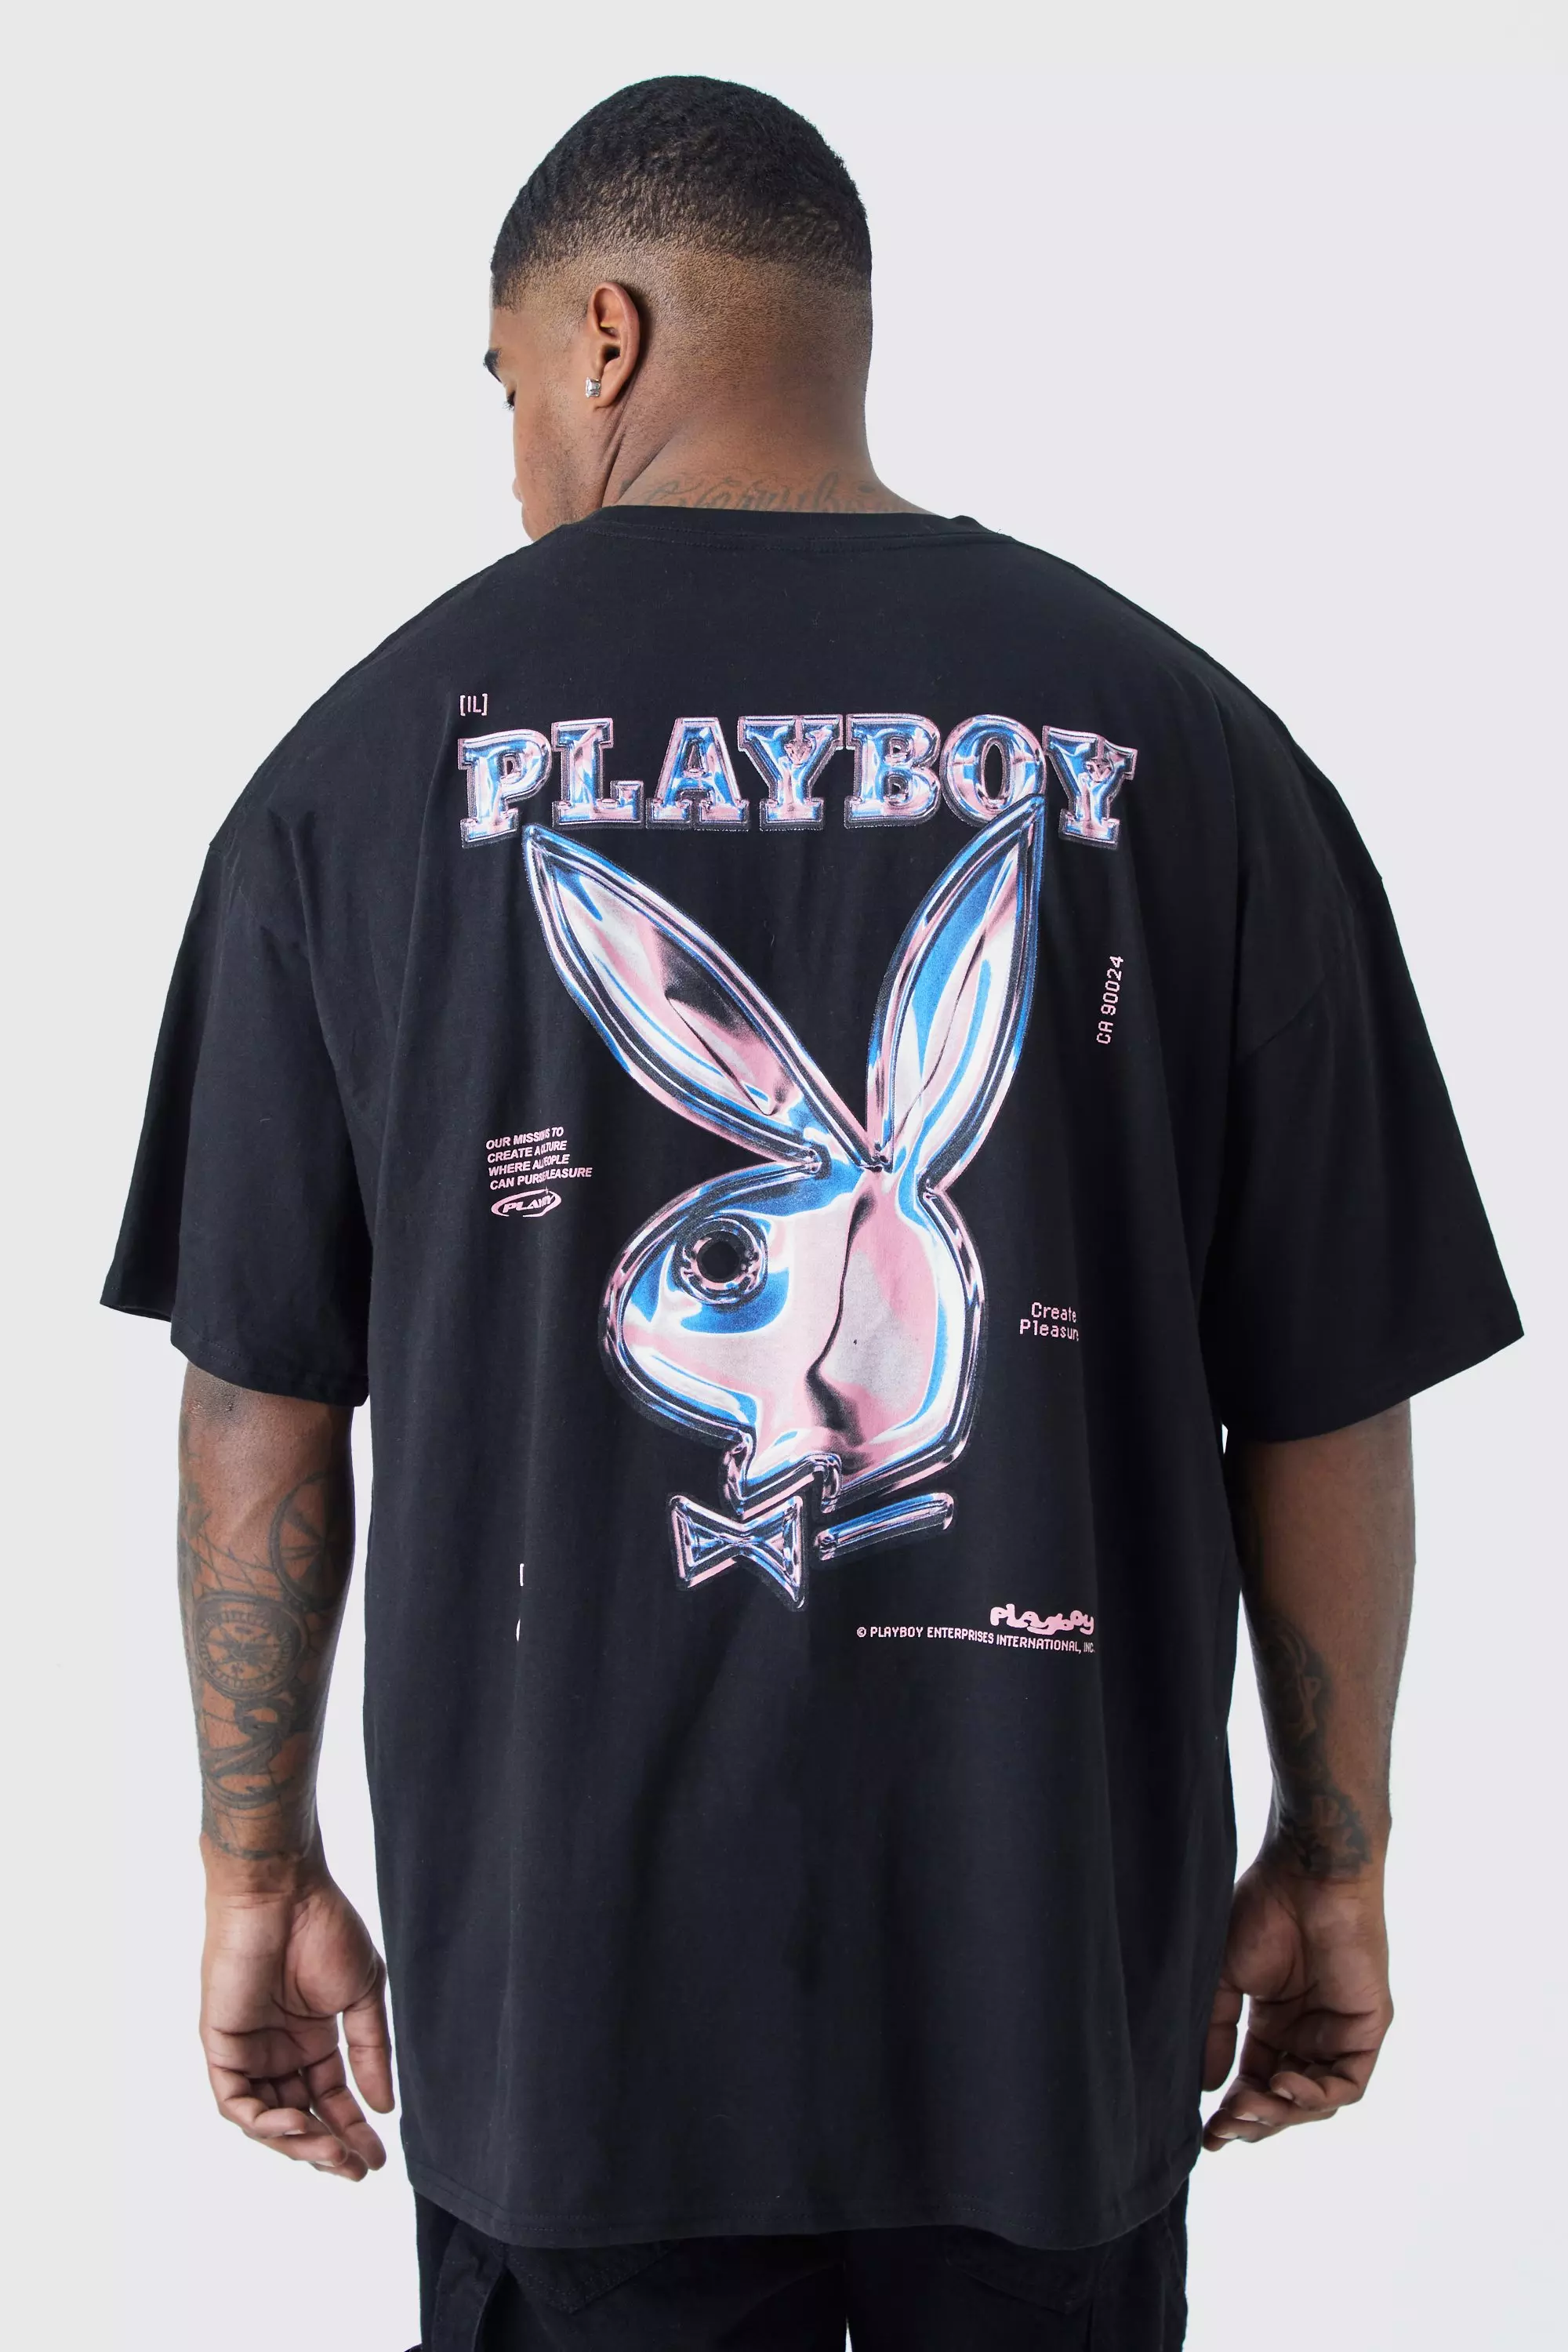 Plus Oversized Playboy License T-shirt Black